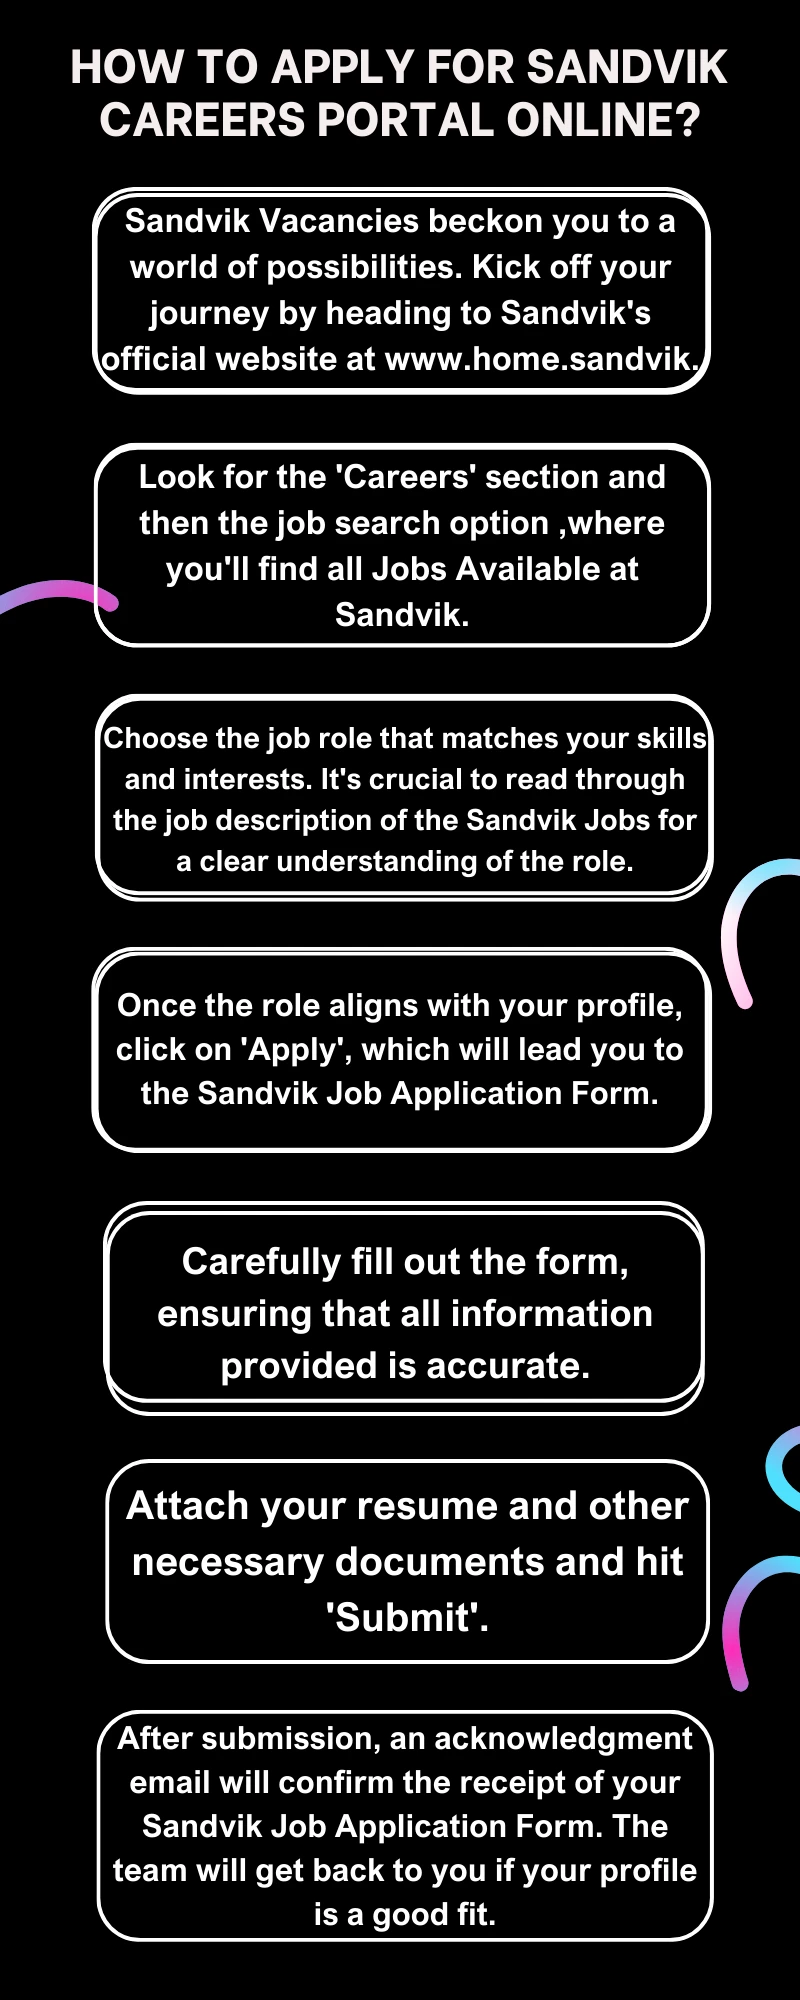 How To Apply for Sandvik Careers Portal Online?